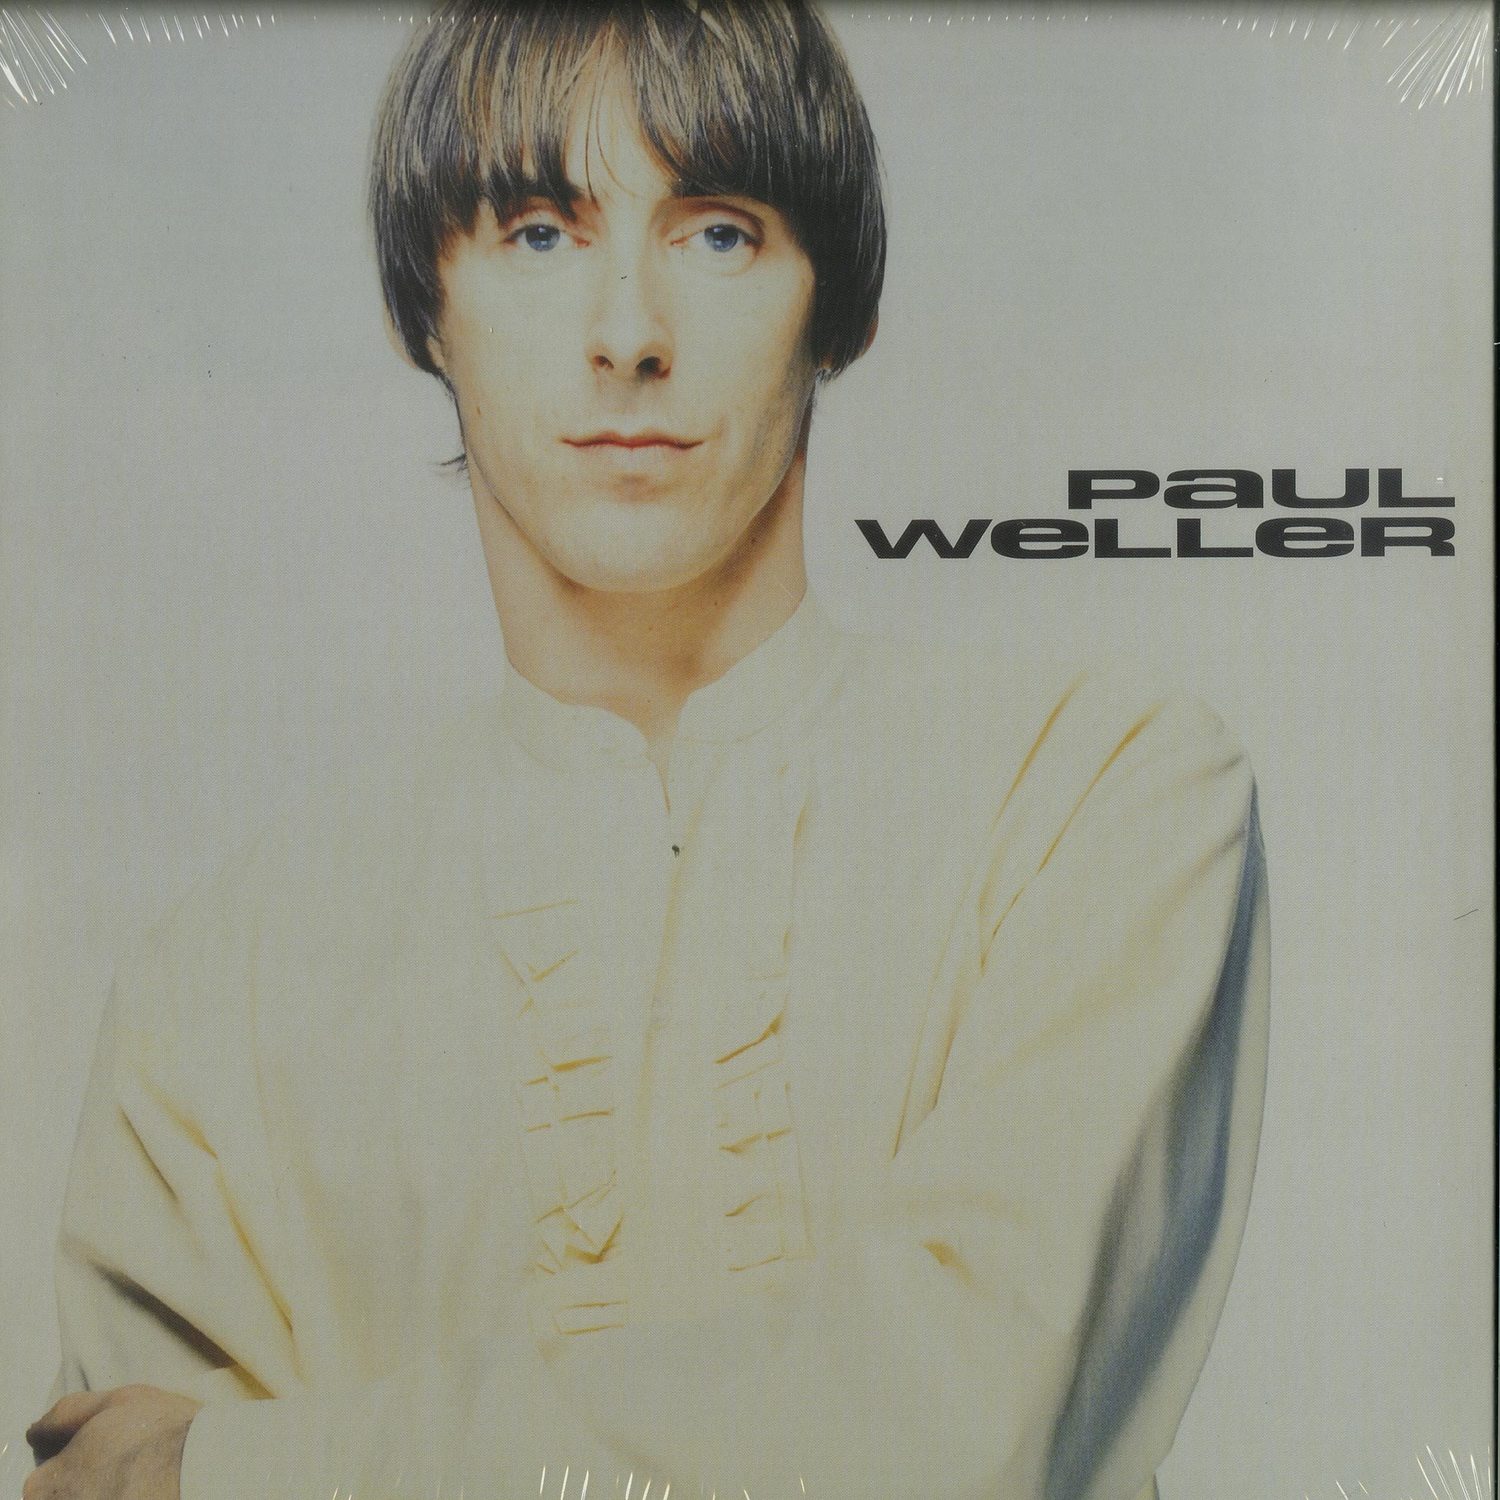 Paul Weller - PAUL WELLER 